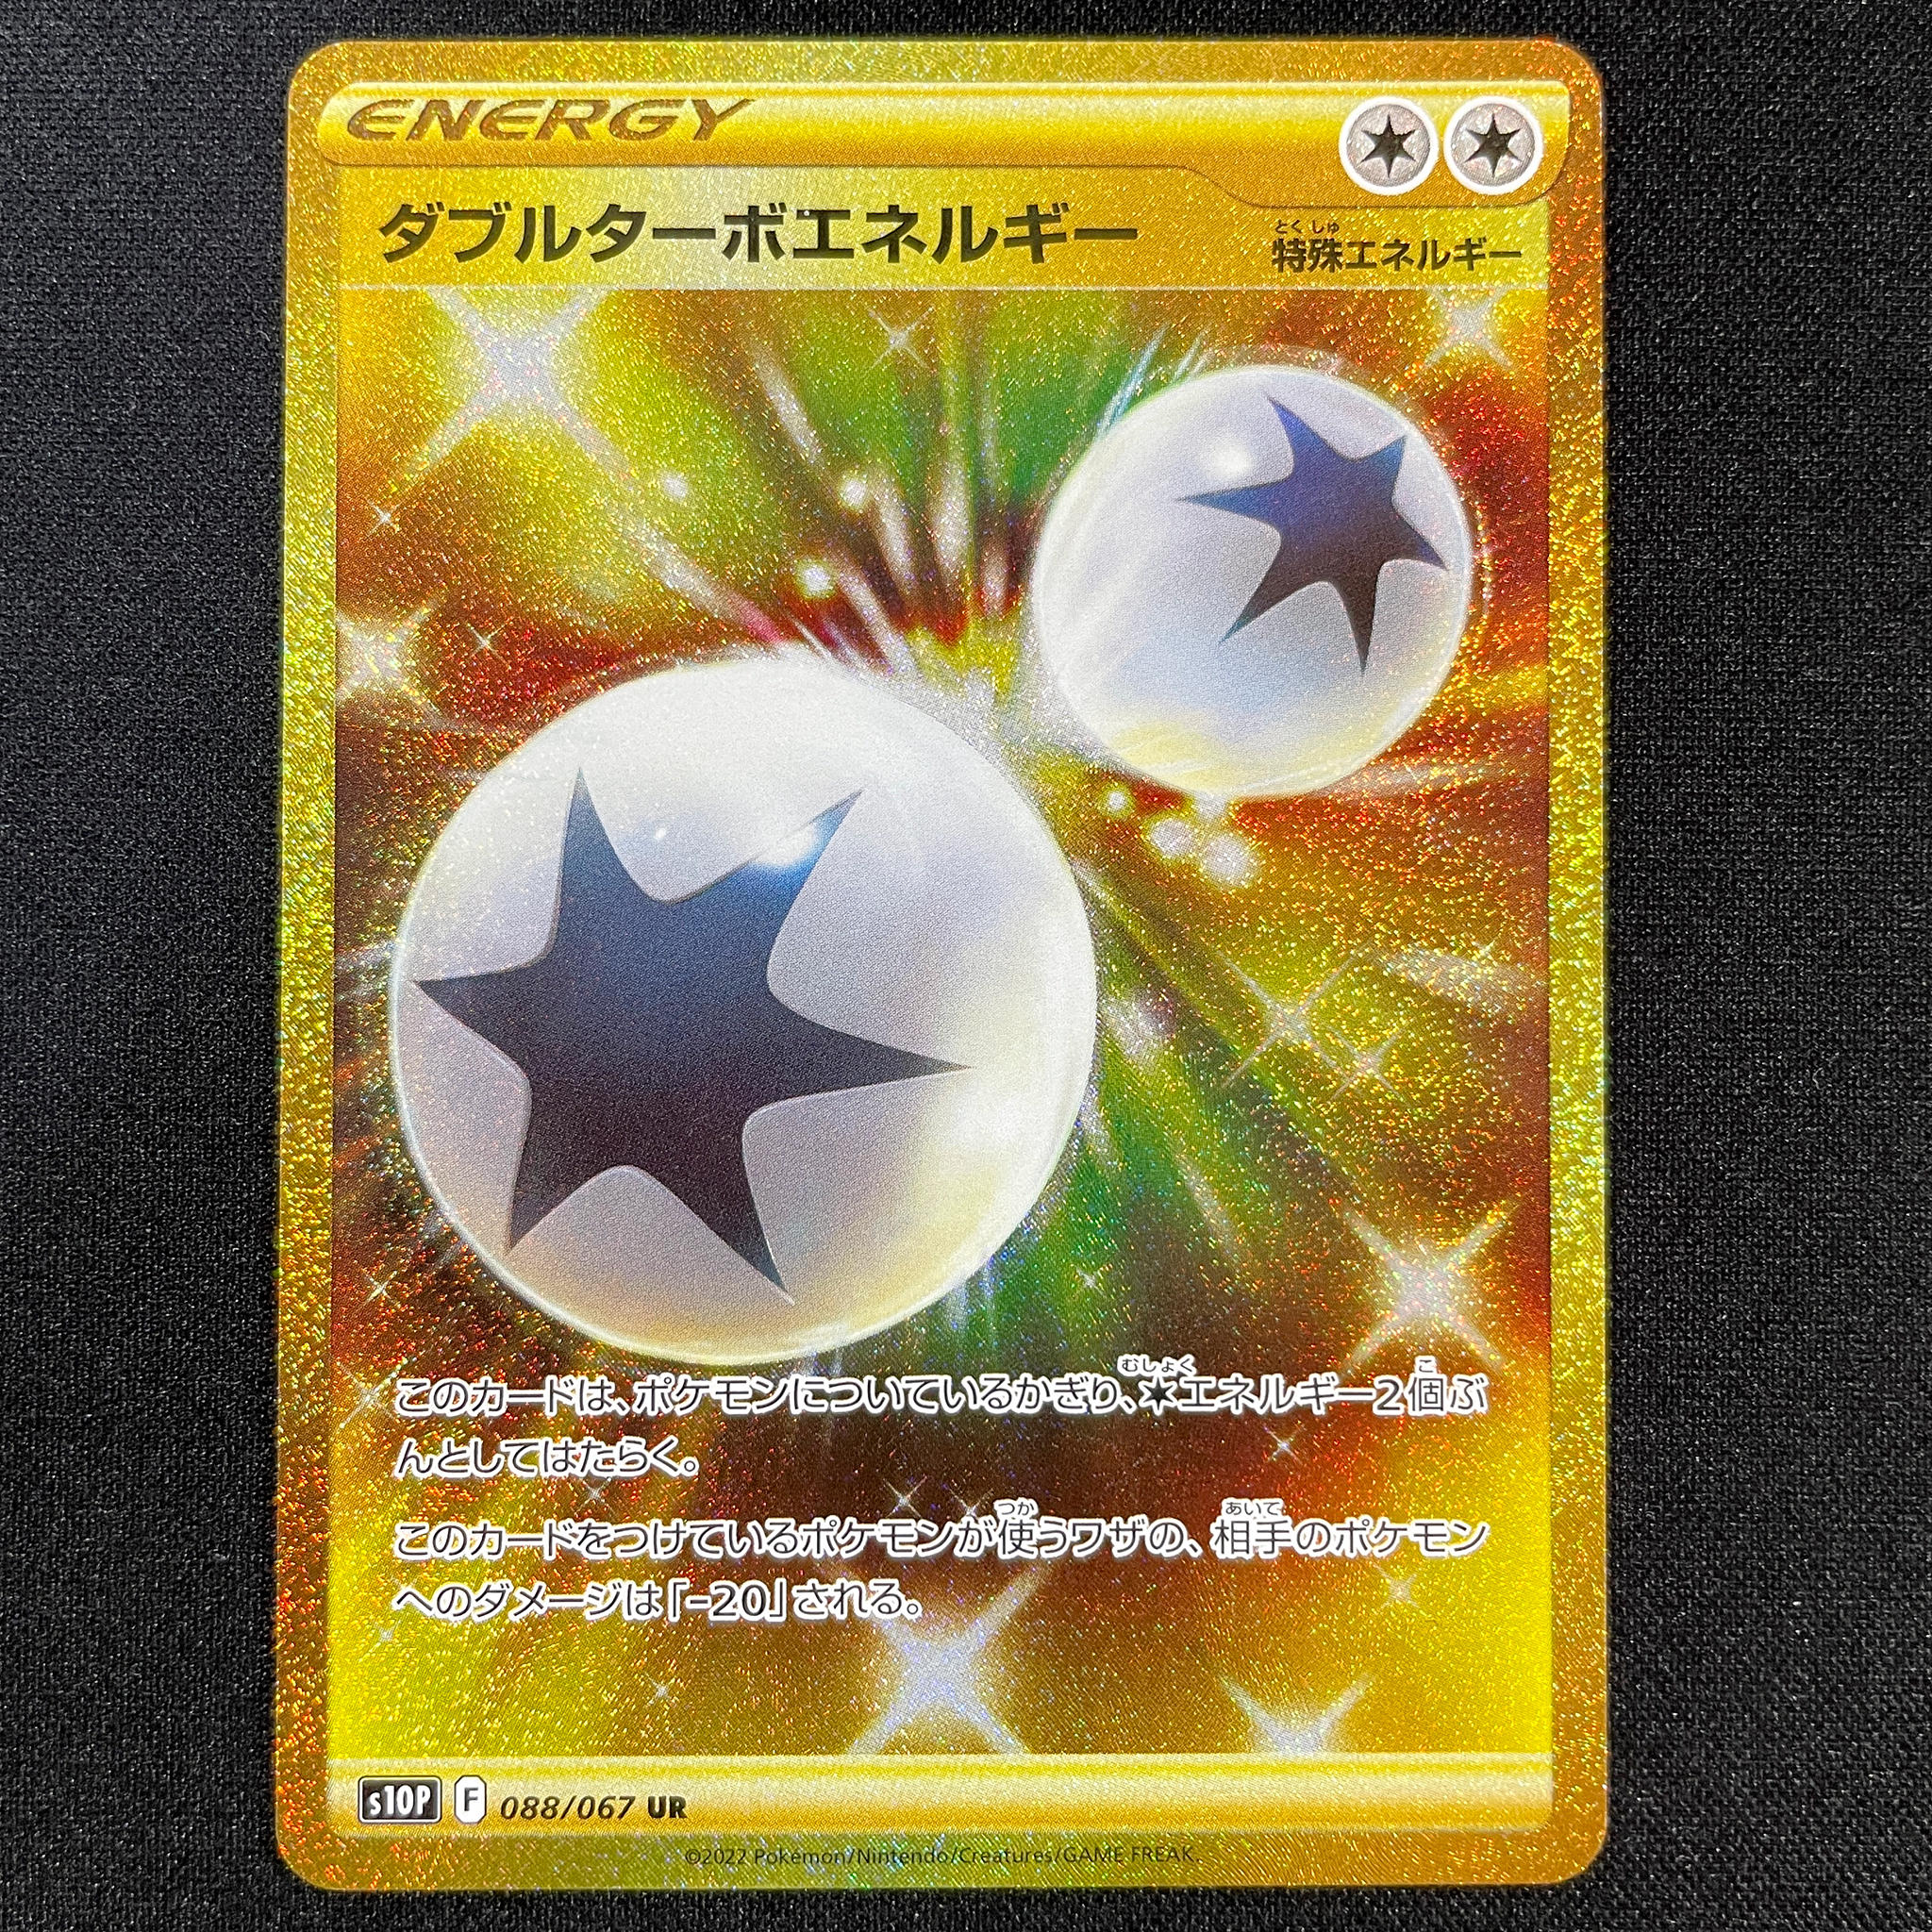 POKÉMON CARD GAME Sword & Shield Expansion pack ｢Space Juggler｣  POKÉMON CARD GAME s10P 088/067 Ultra Rare card  Double Turbo Energy